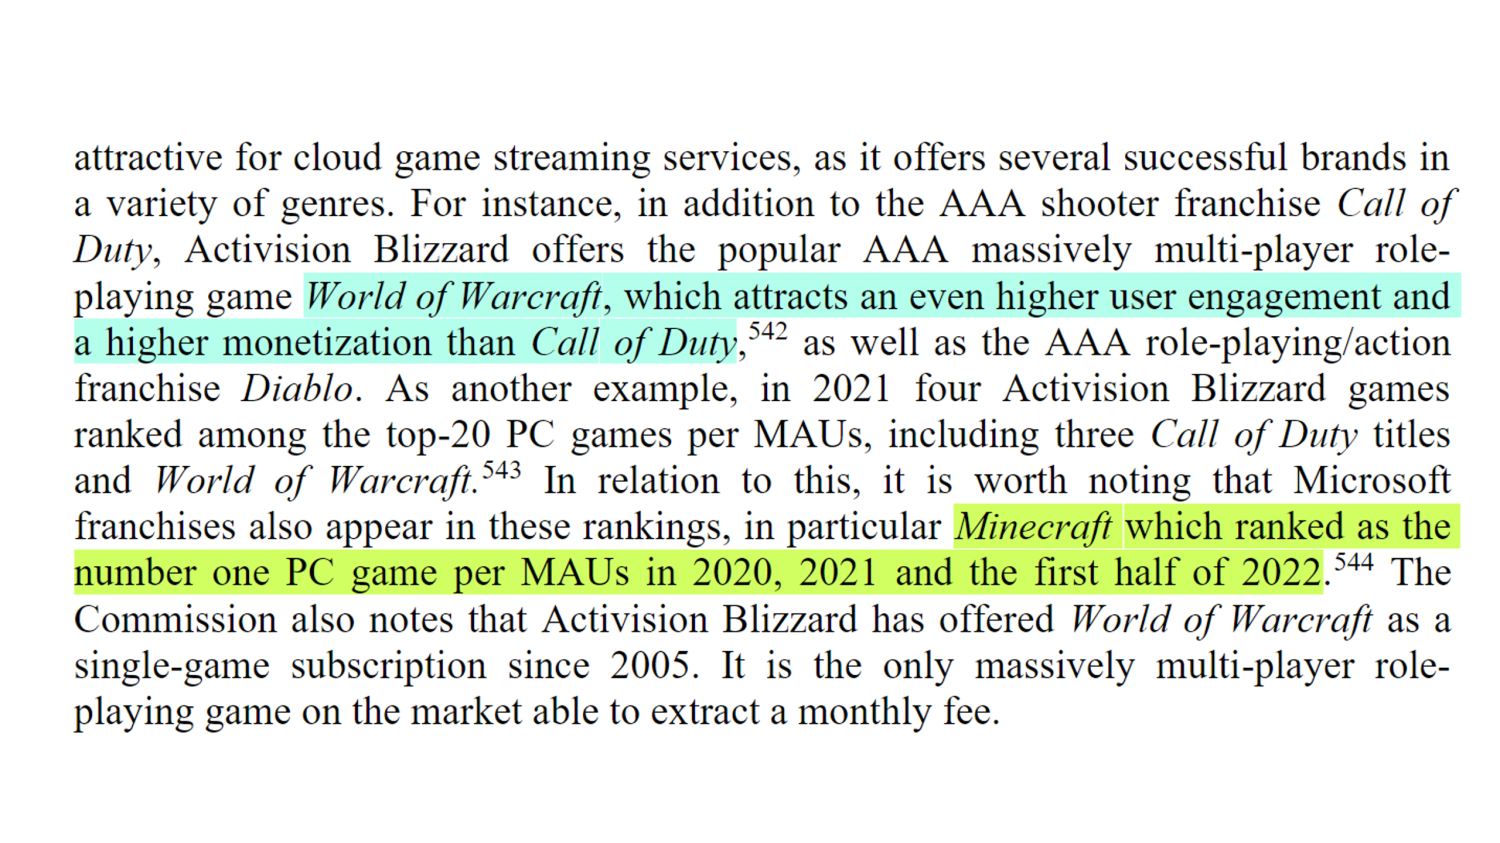 World of Warcraft beats Call of Duty in certain metrics, European